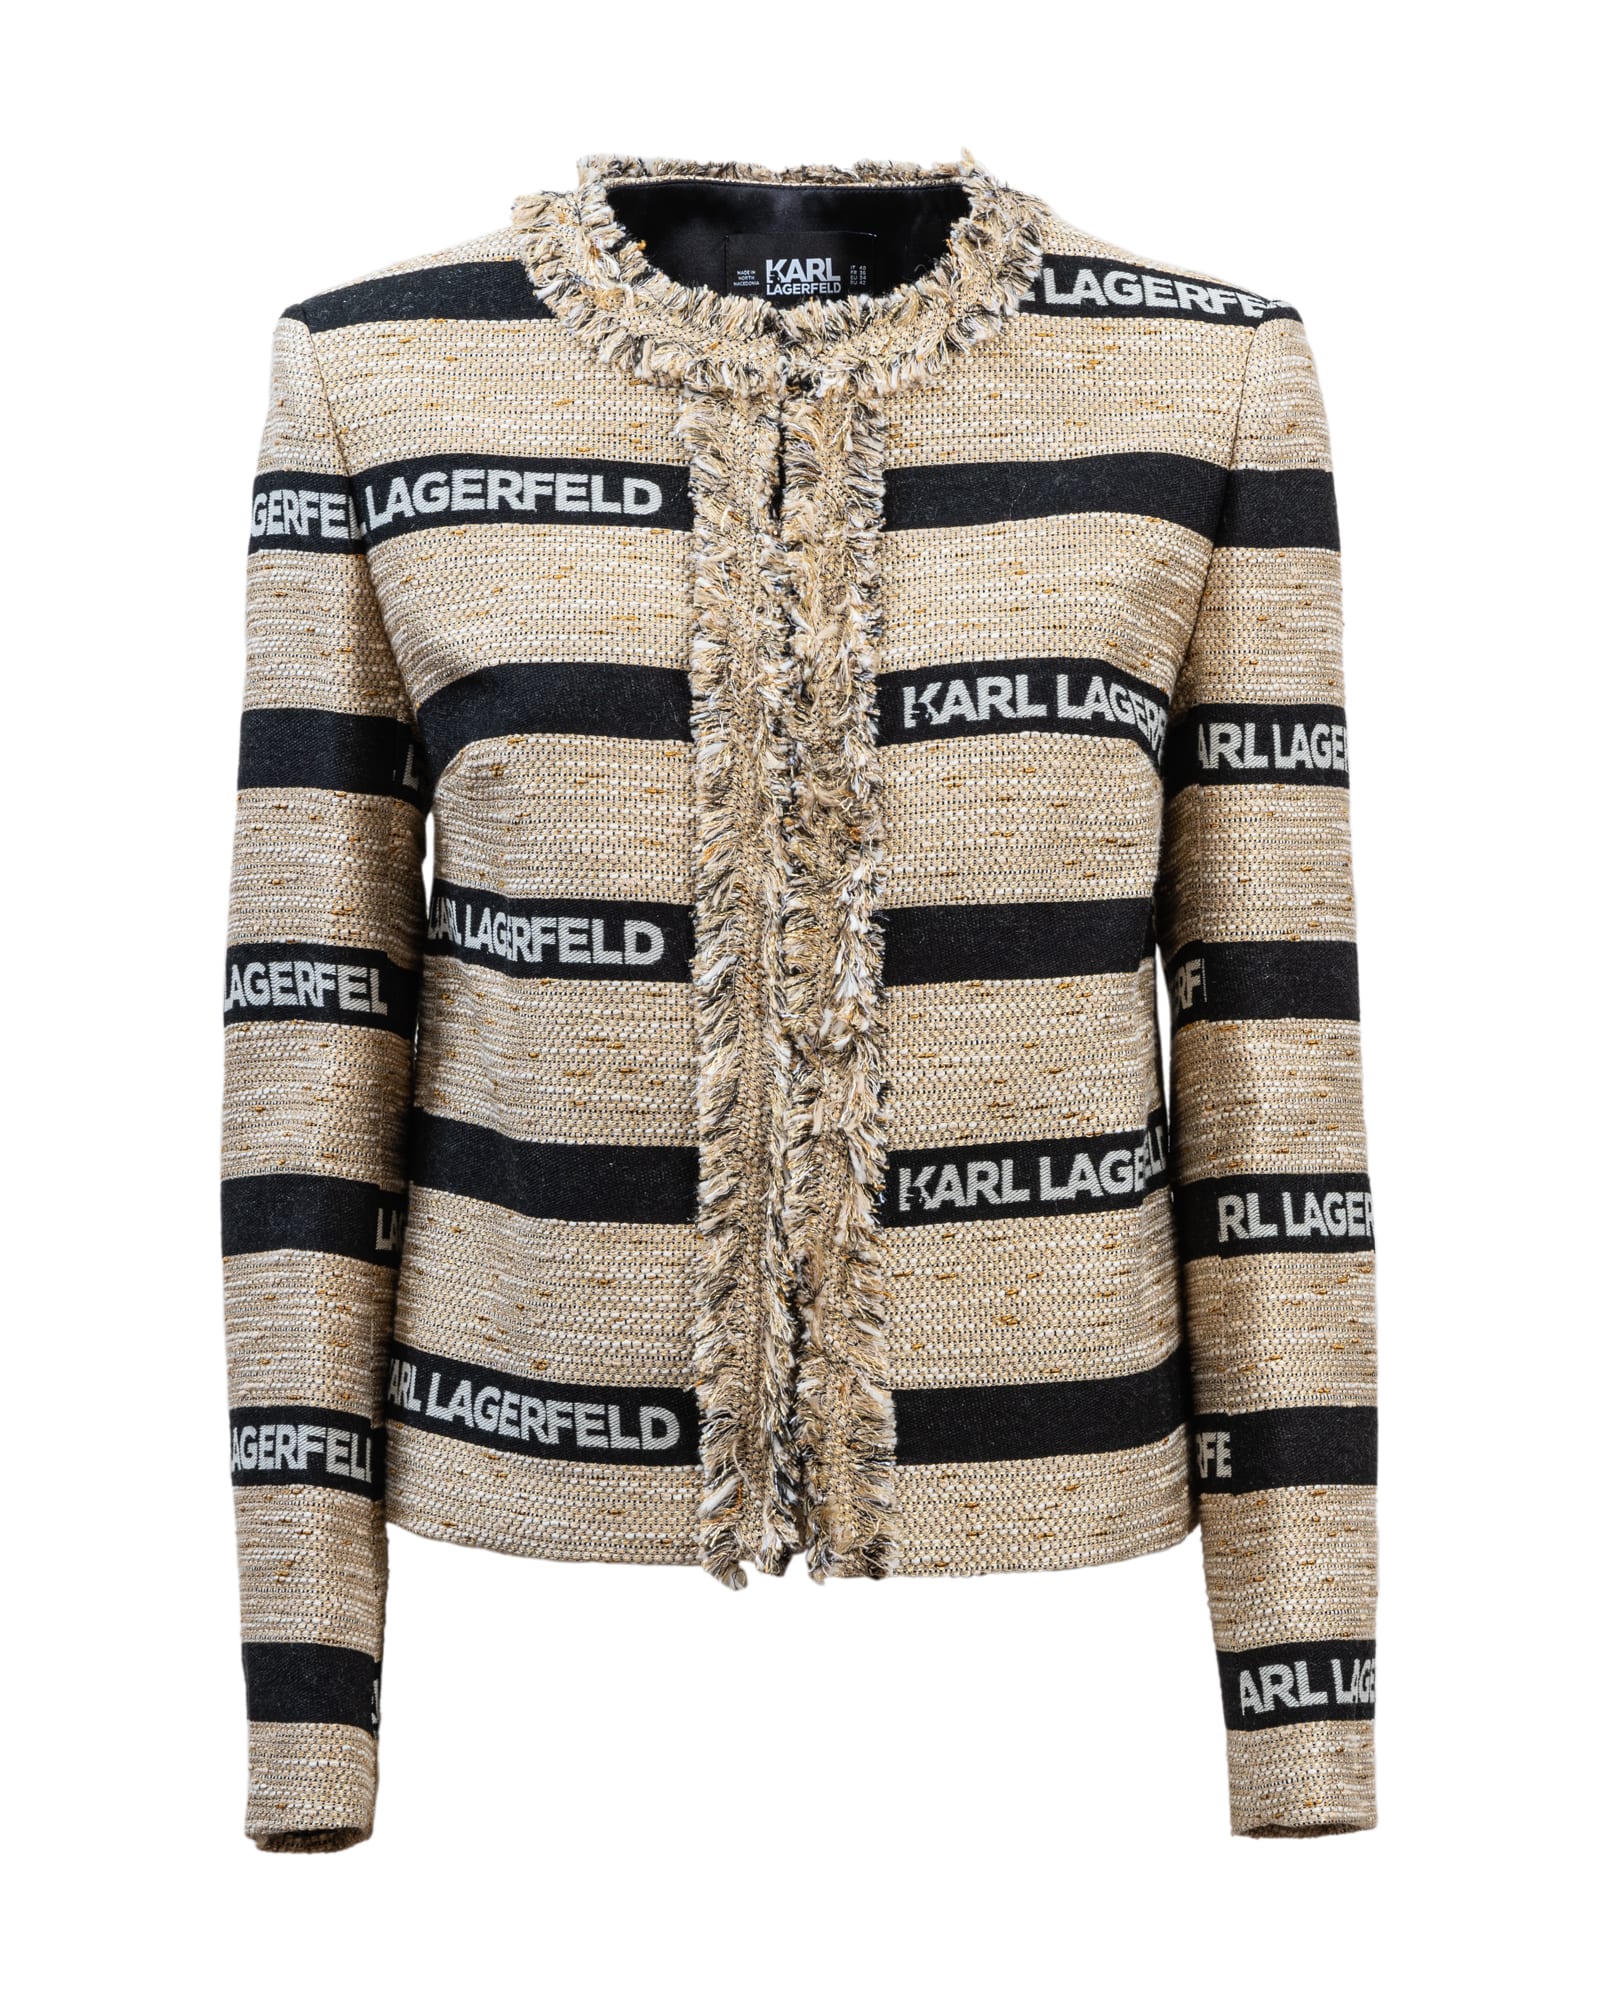 Karl Lagerfeld classic jacquard jacket